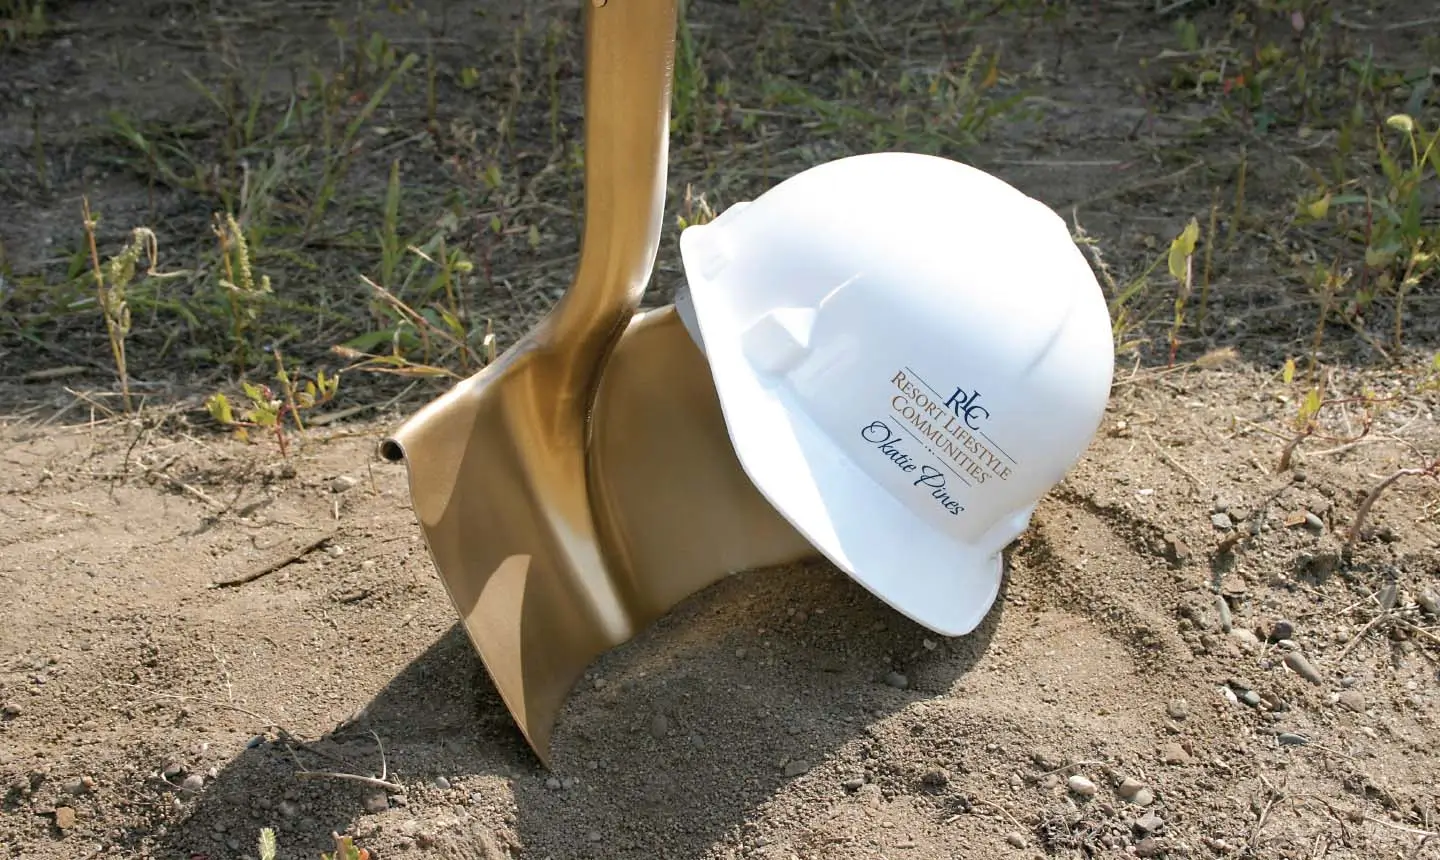 Golden shovel and Resort Lifestyle Communities hard hat representing Okatie Pines construction.